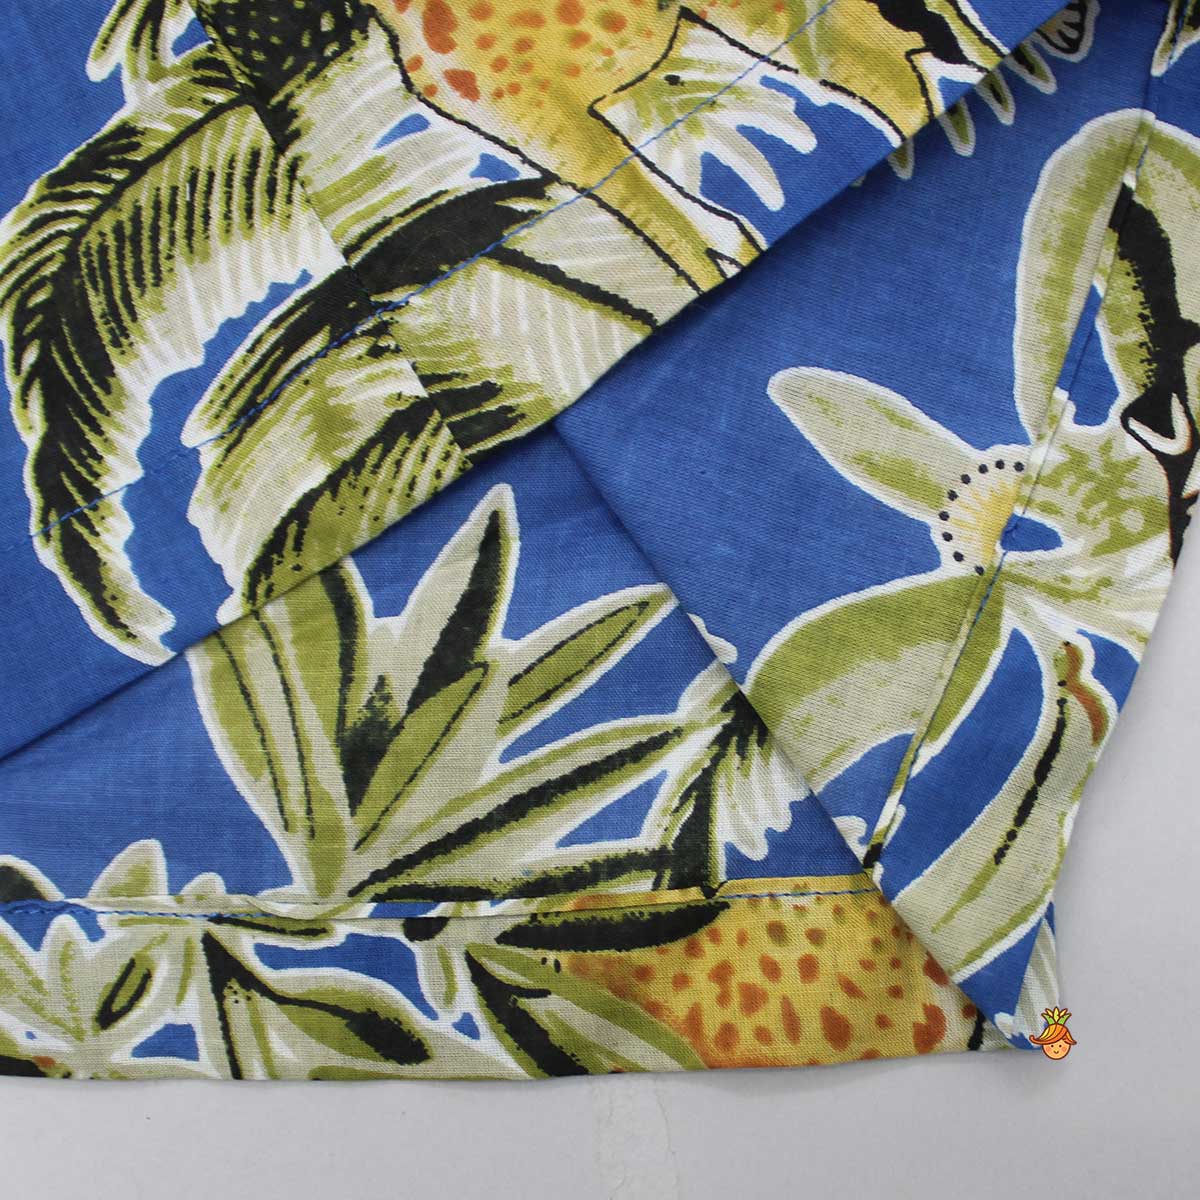 Notched Collar Jungle Theme Printed Sleepwear